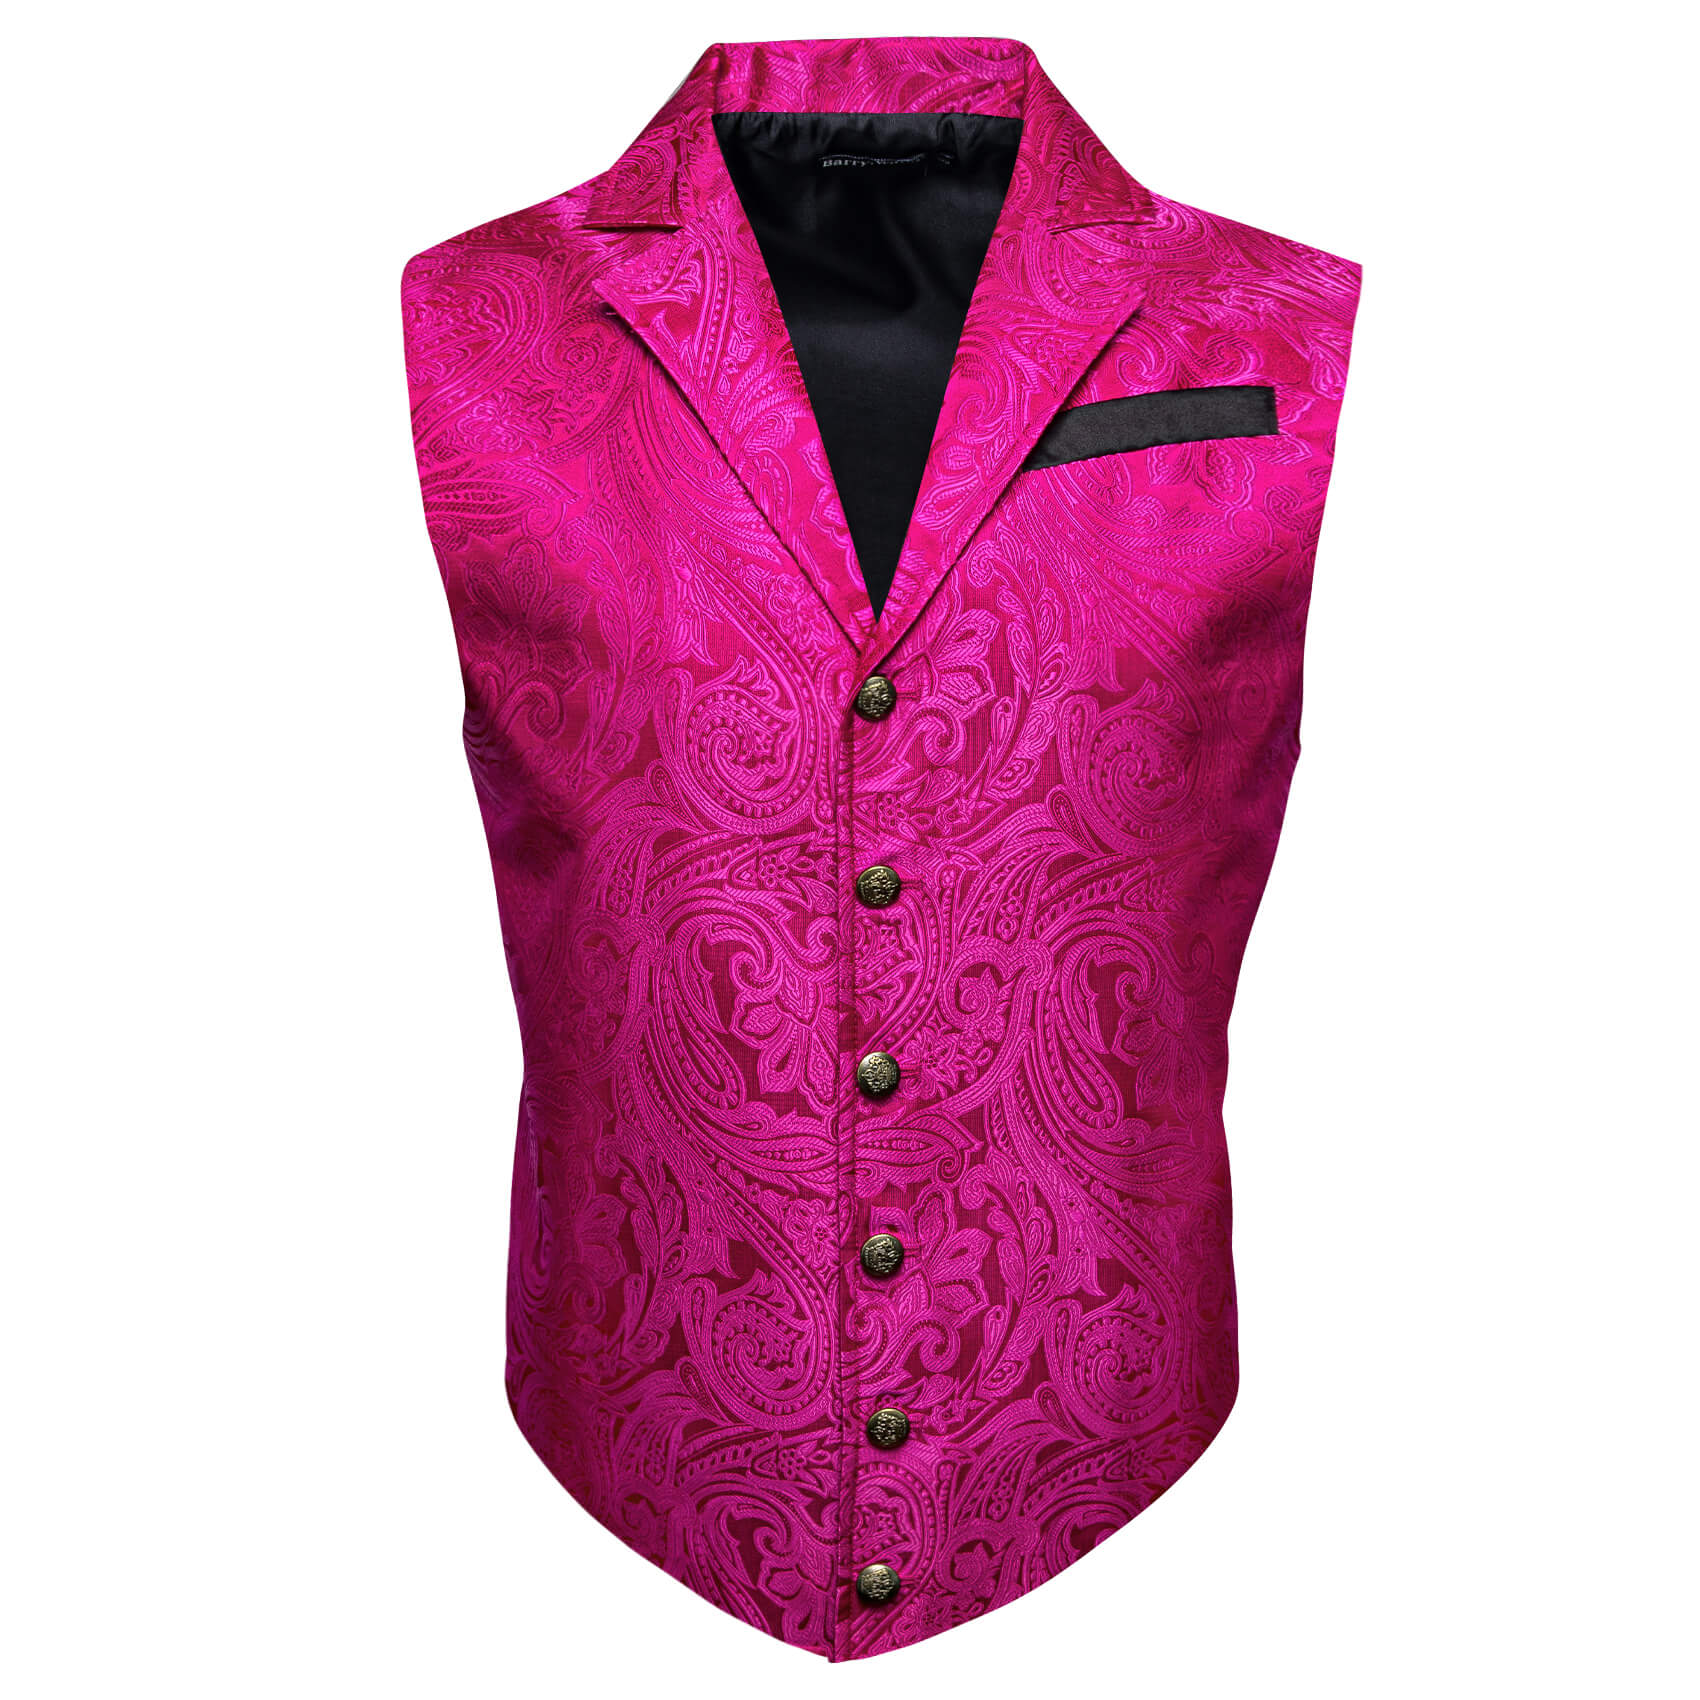  Hot Pink Paisley Mens Button Up Vest